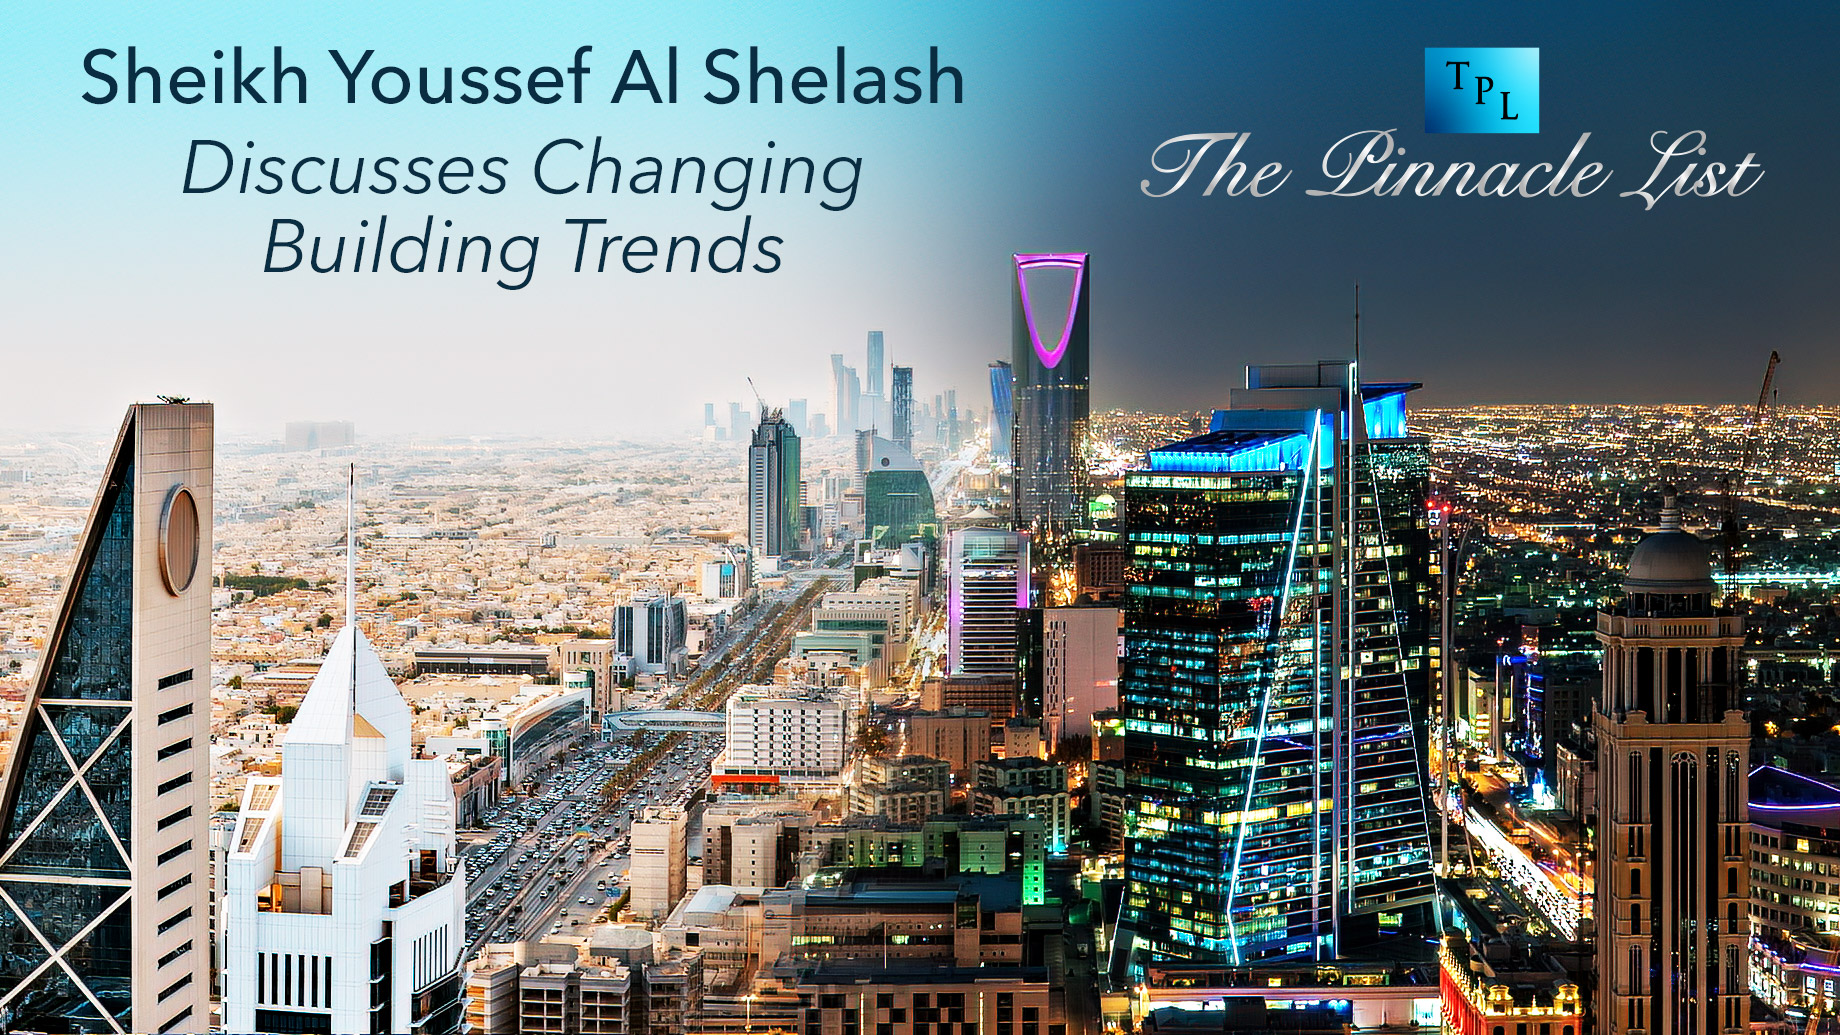 Sheikh Youssef Al Shelash Discusses Changing Building Trends